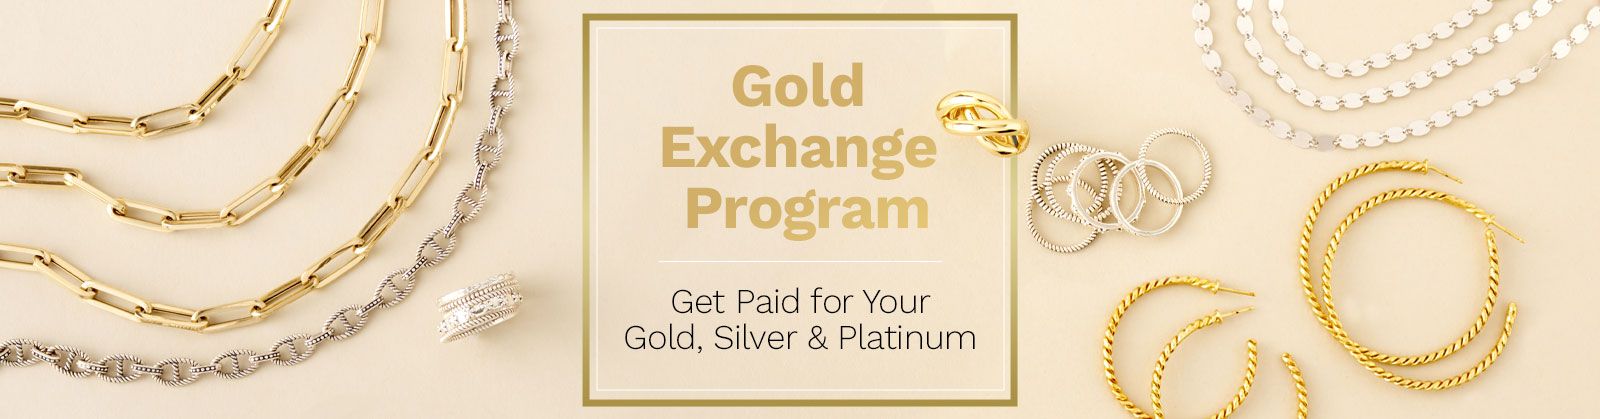 ShopHQ Gold Exchange Program  Simple & Secure Get Paid for Your Gold, Silver & Platinum